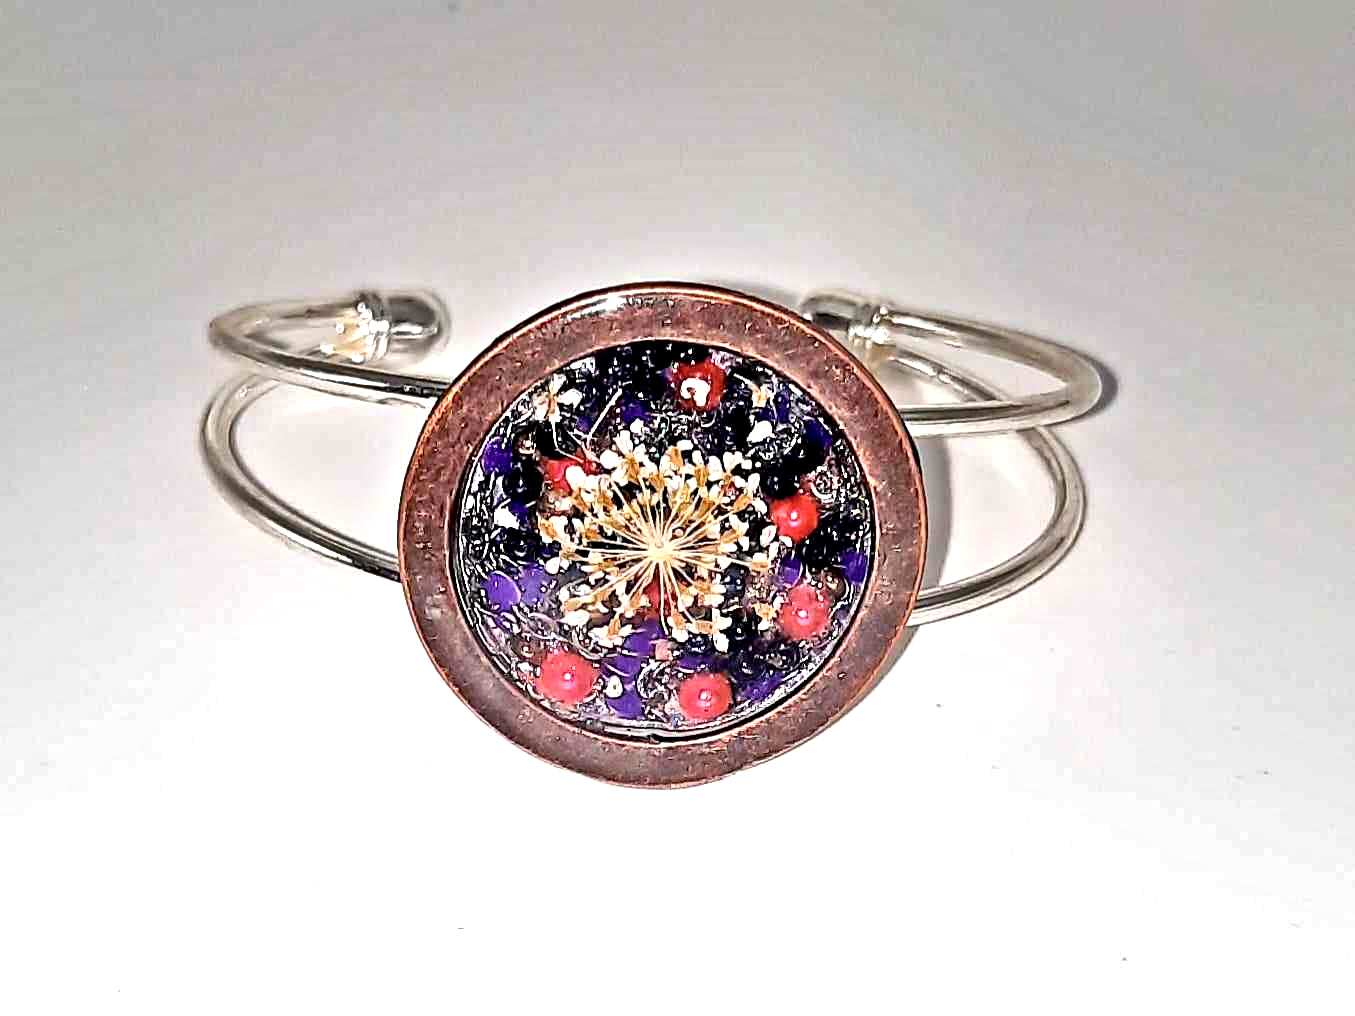 Handcrafted silver copper cuff bracelet by Josie's